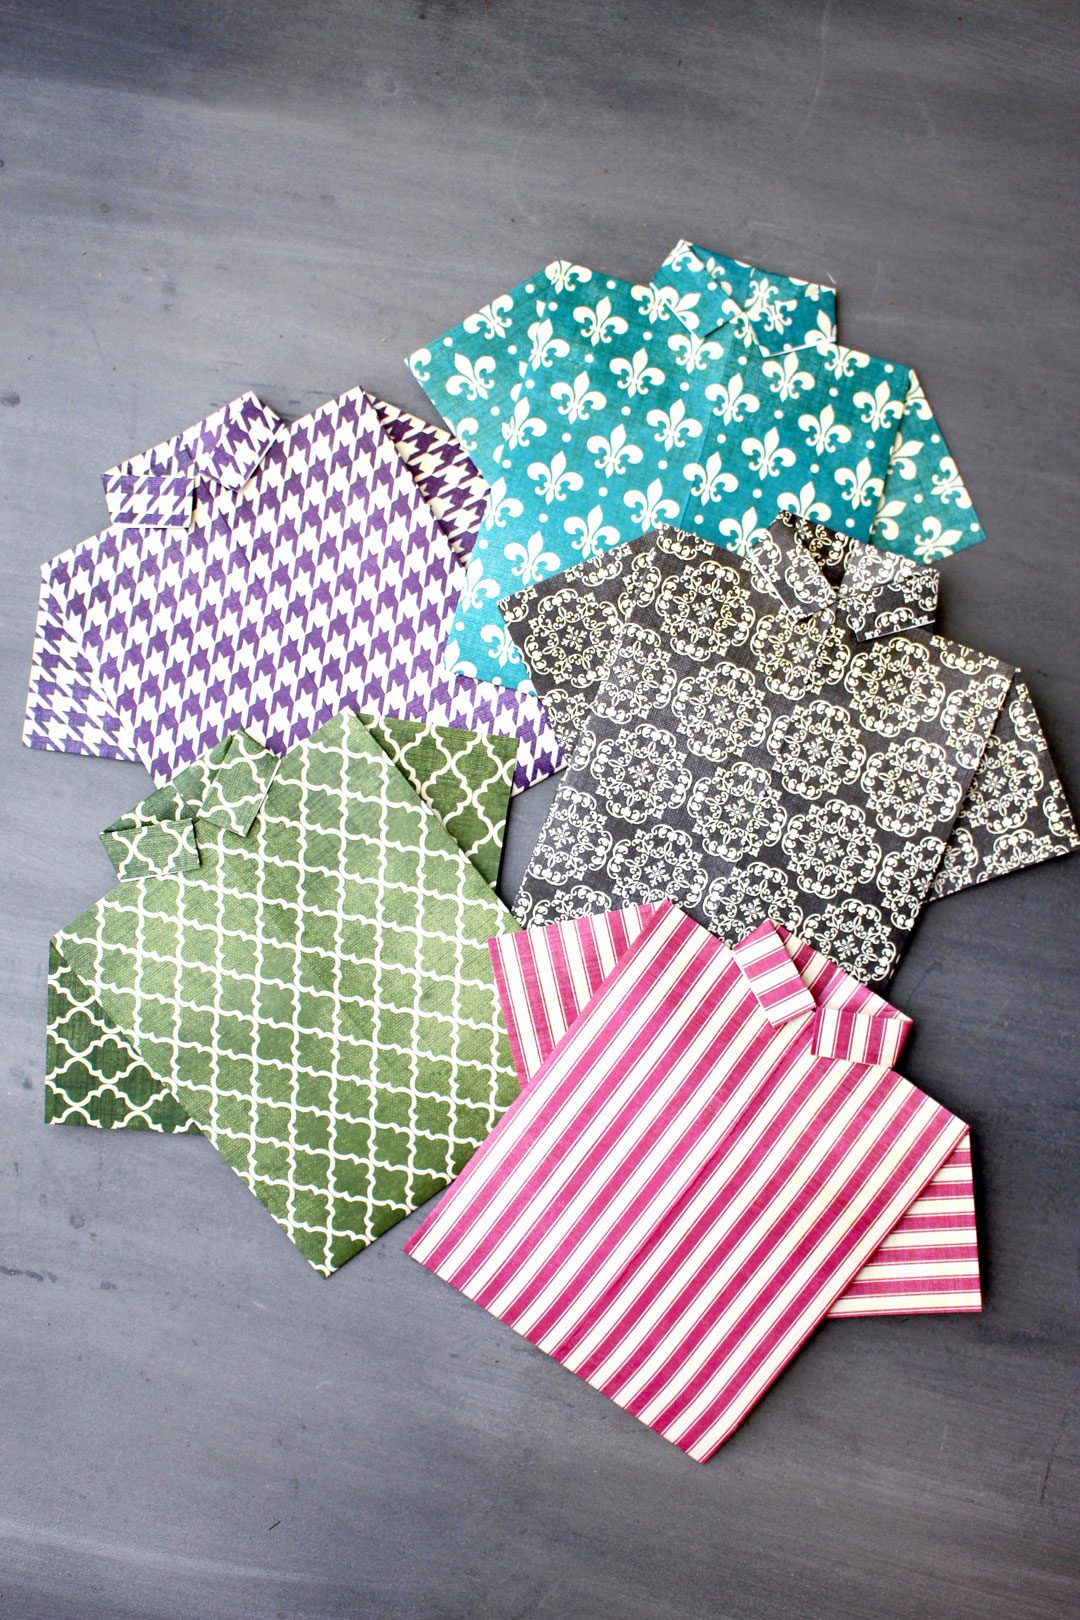 https://welcometonanas.com/wp-content/uploads/2018/06/Welcome-to-Nanas-Origami-Shirt-Fathers-Day-DIY-kids-crafts-card-10.jpg